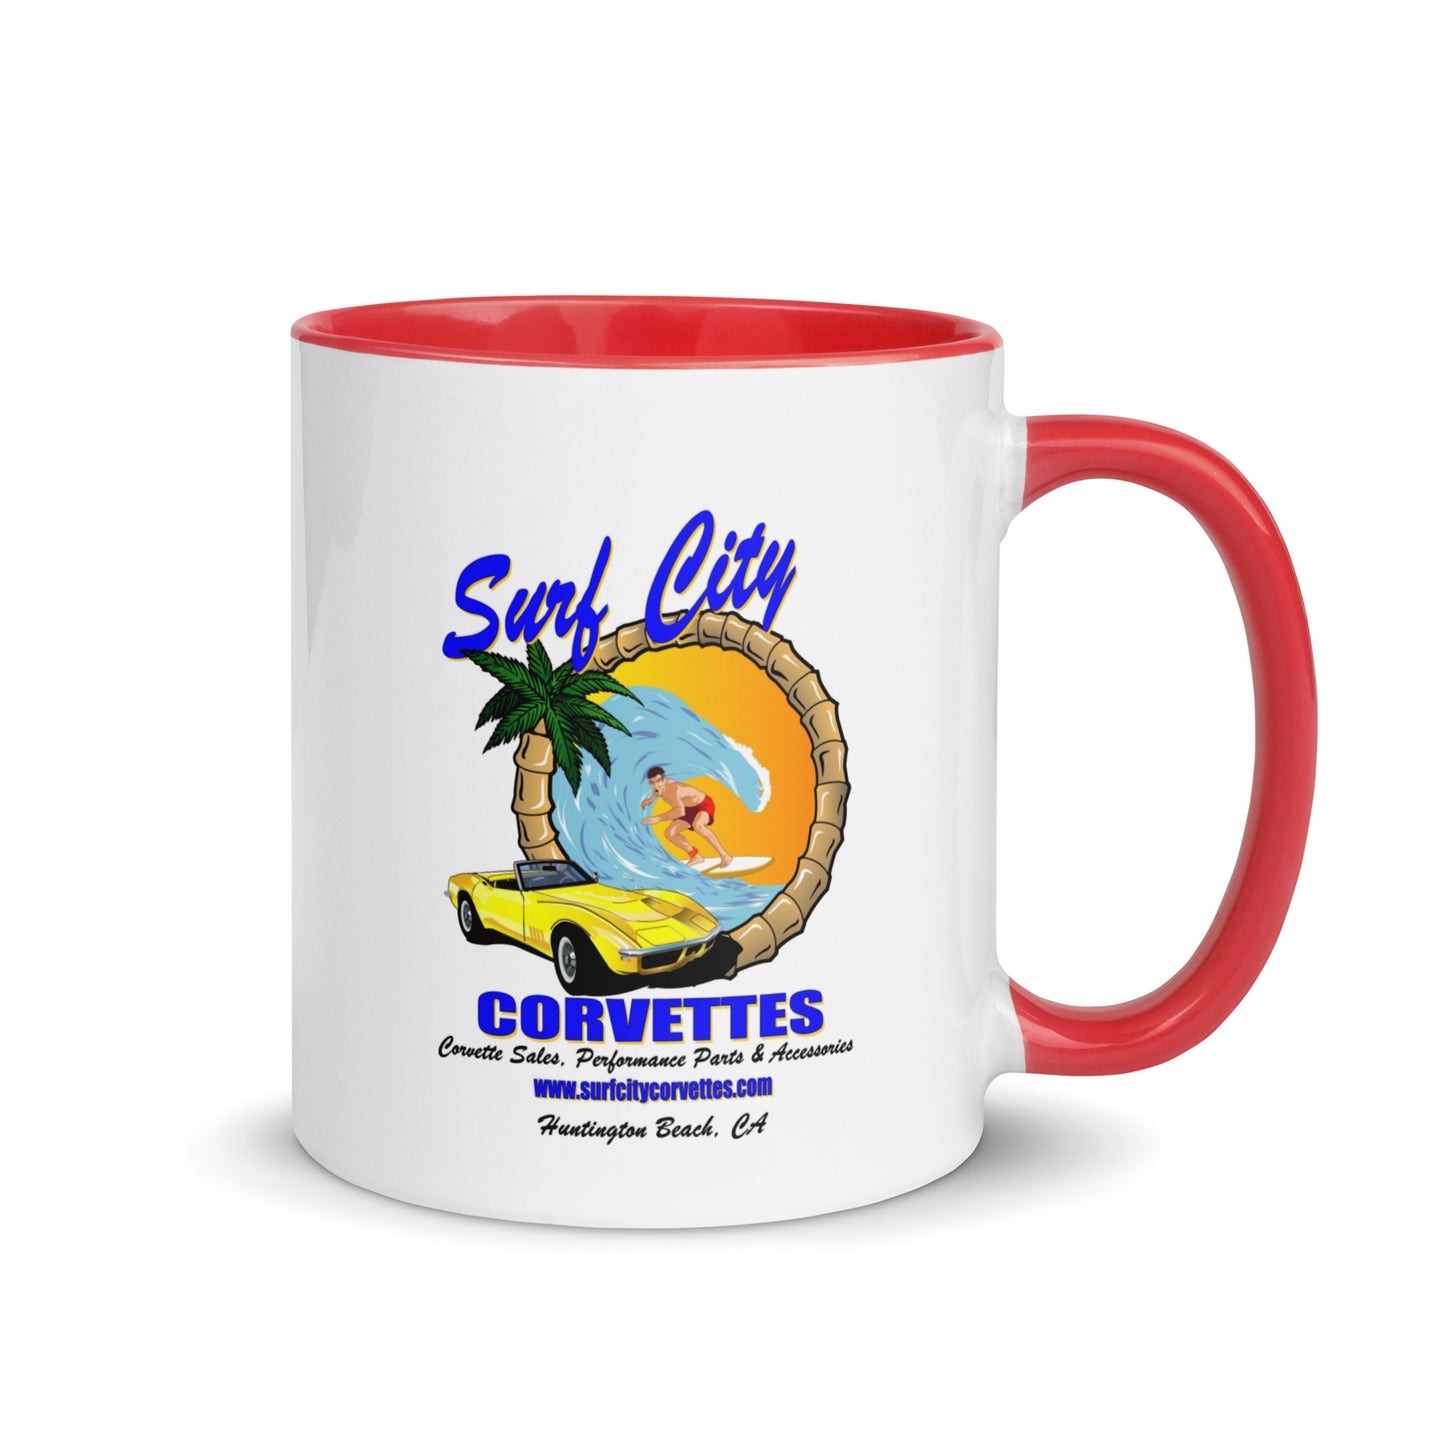 Surf City Corvettes Logo Coffee Mug - Red